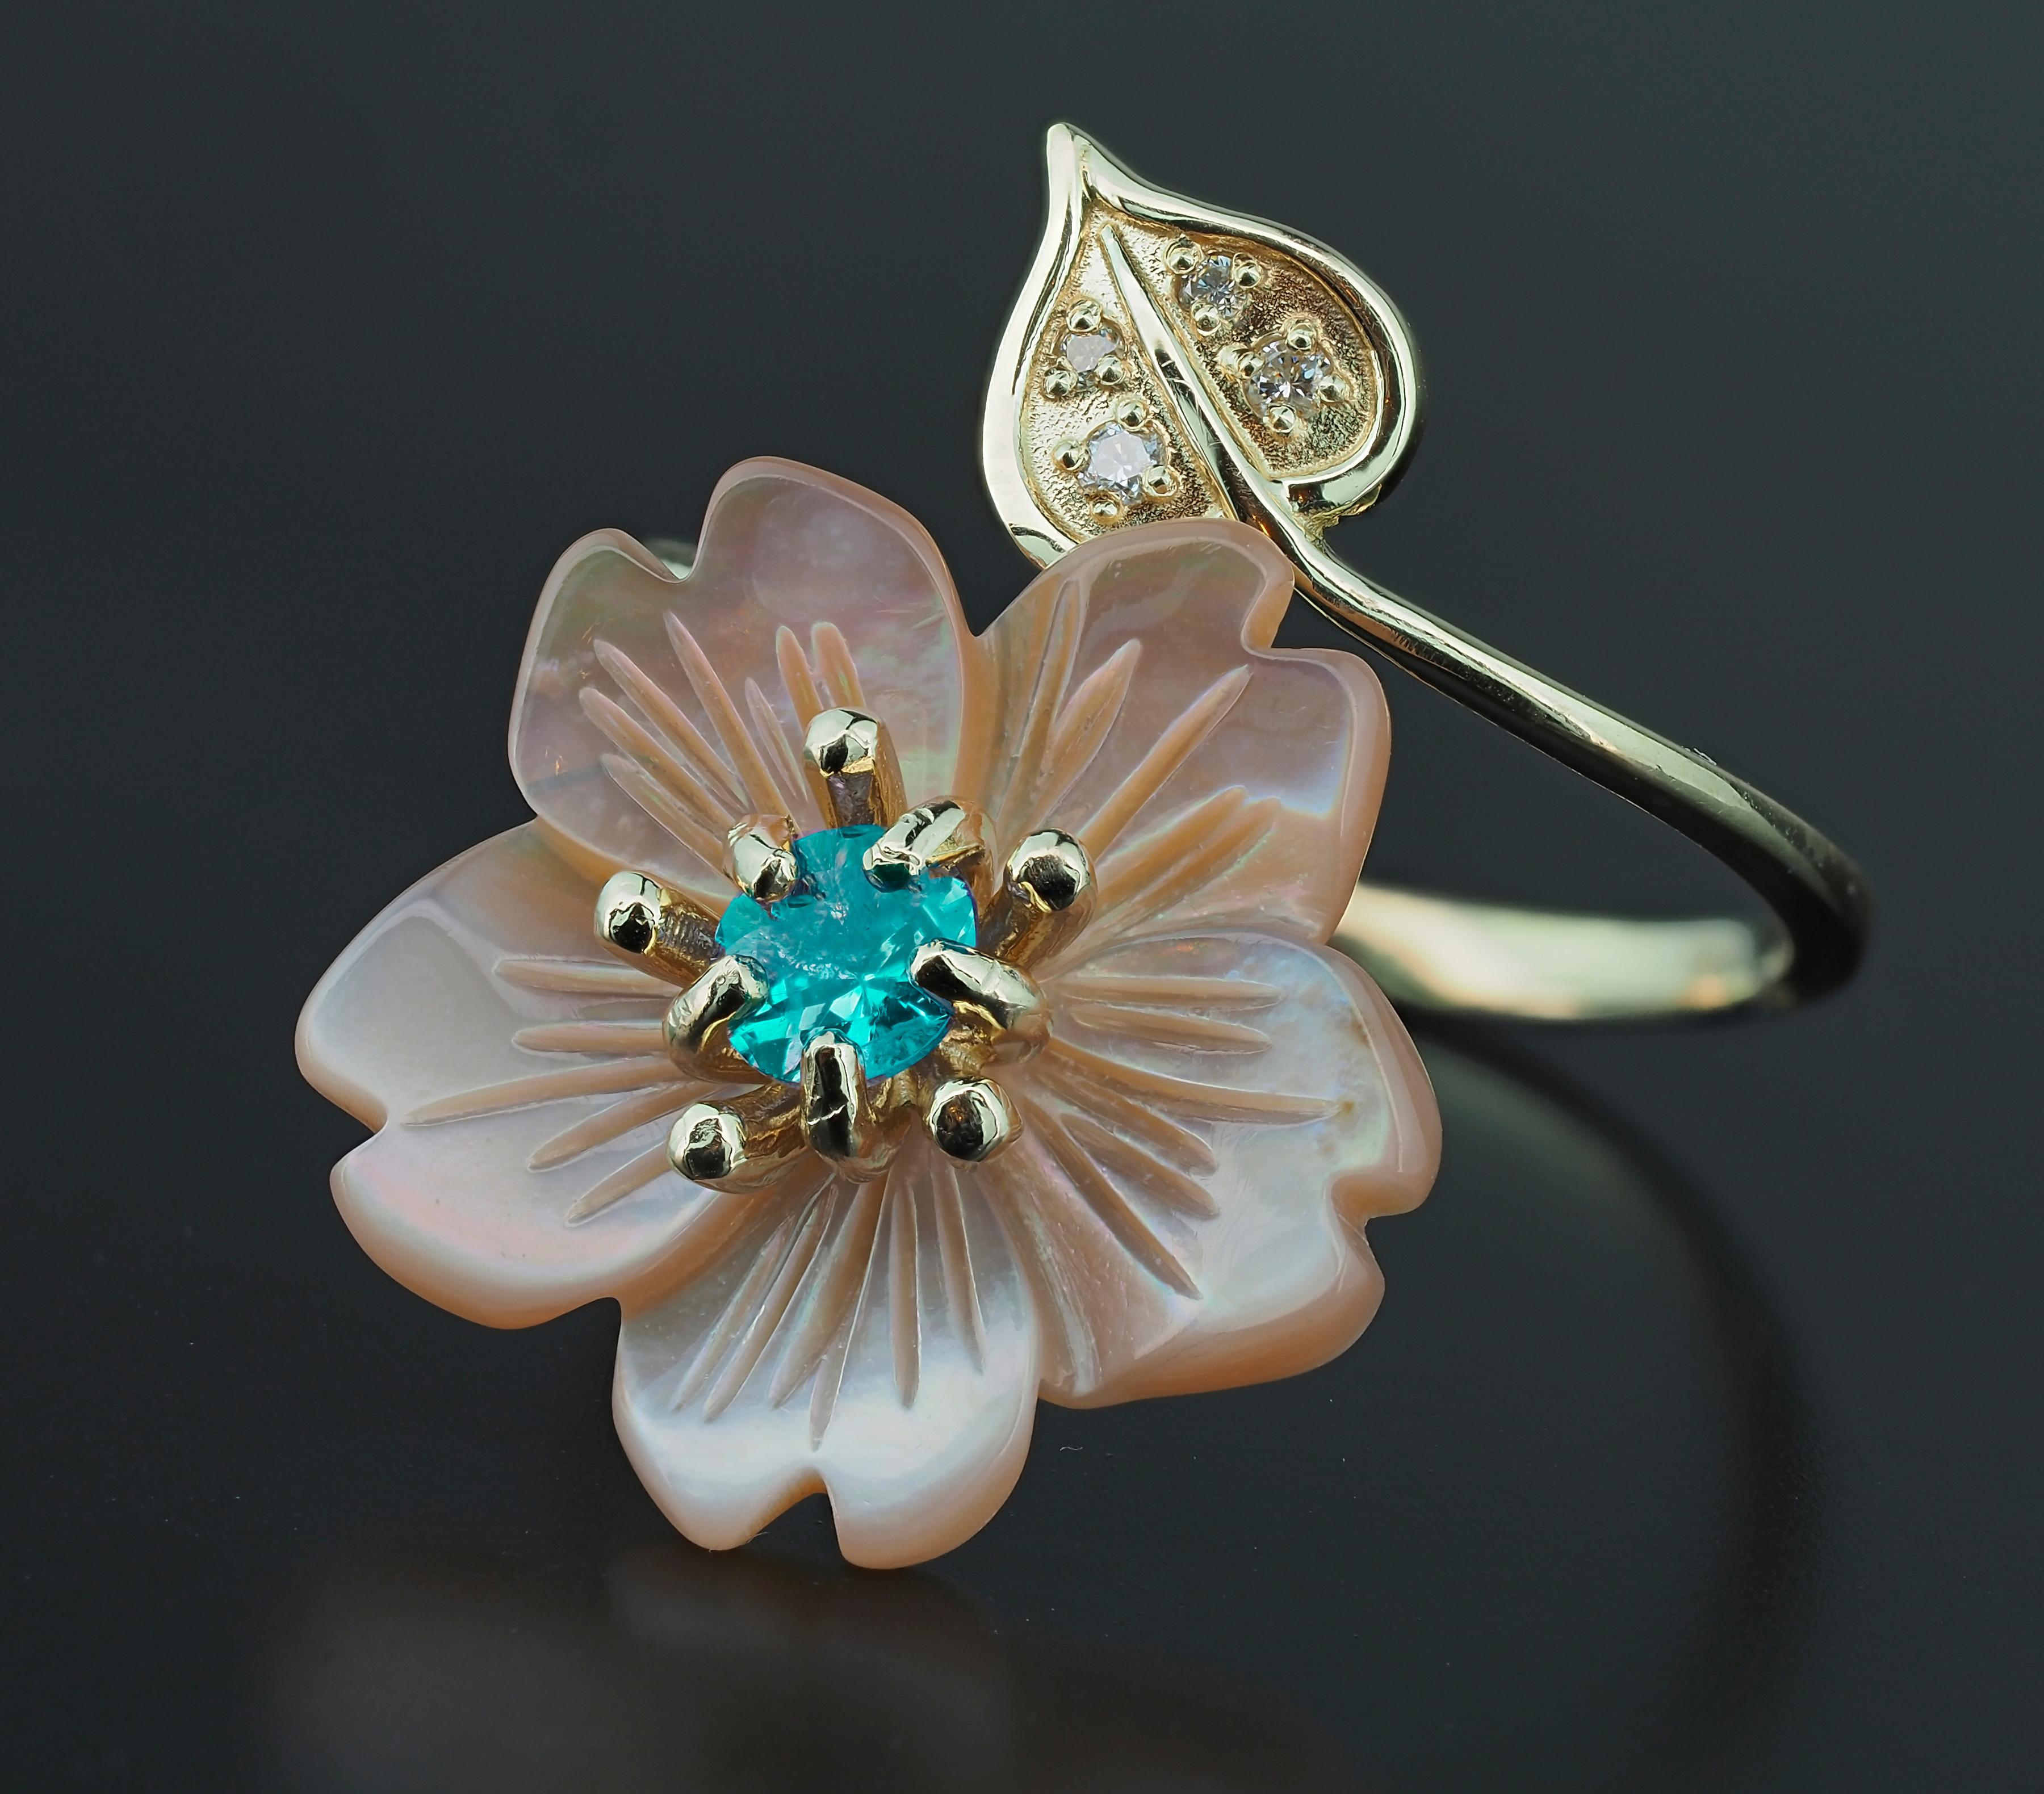 For Sale:  Carved Flower 14k ring with gemstones.  4